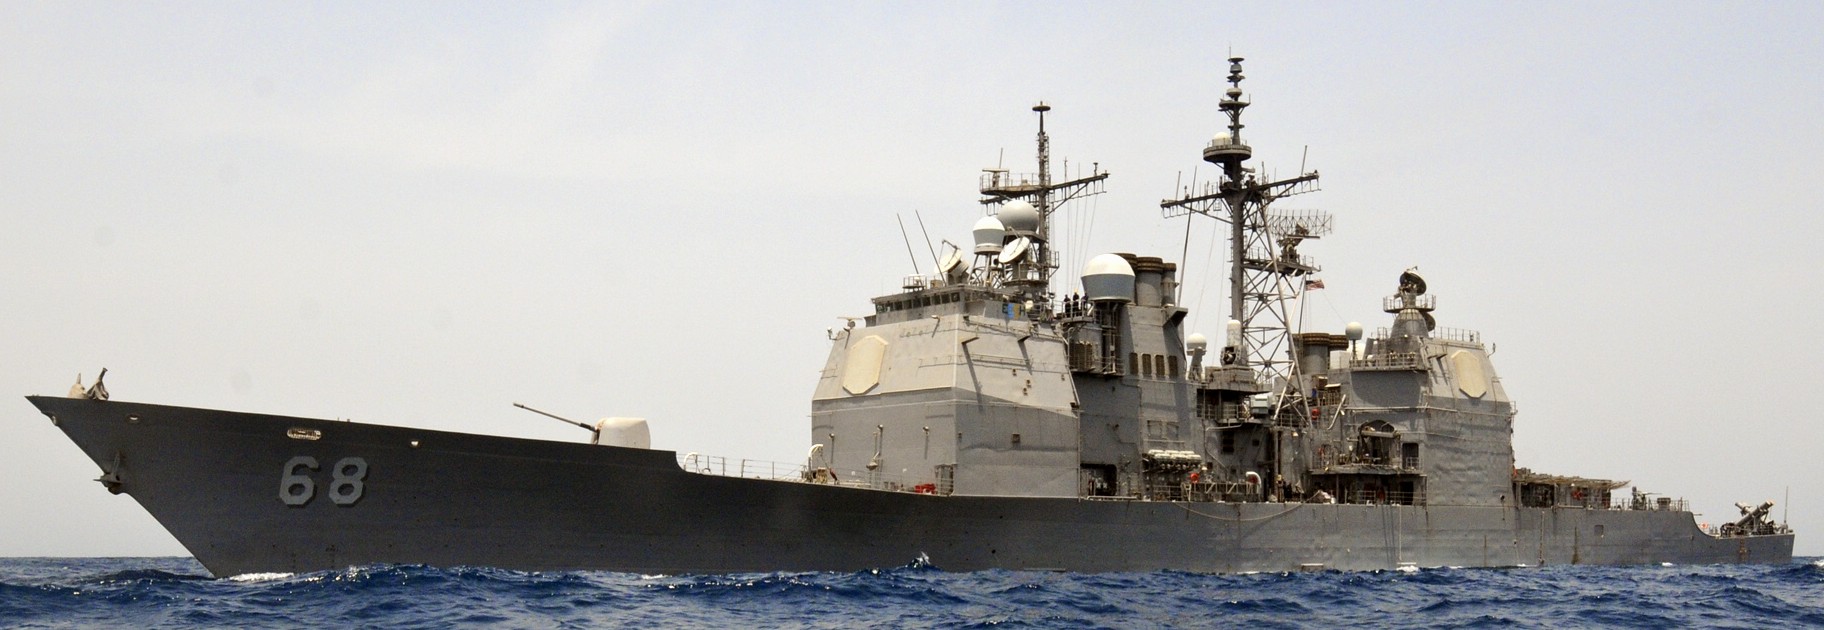 cg-68 uss anzio ticonderoga class guided missile cruiser aegis us navy 33 gulf of aden